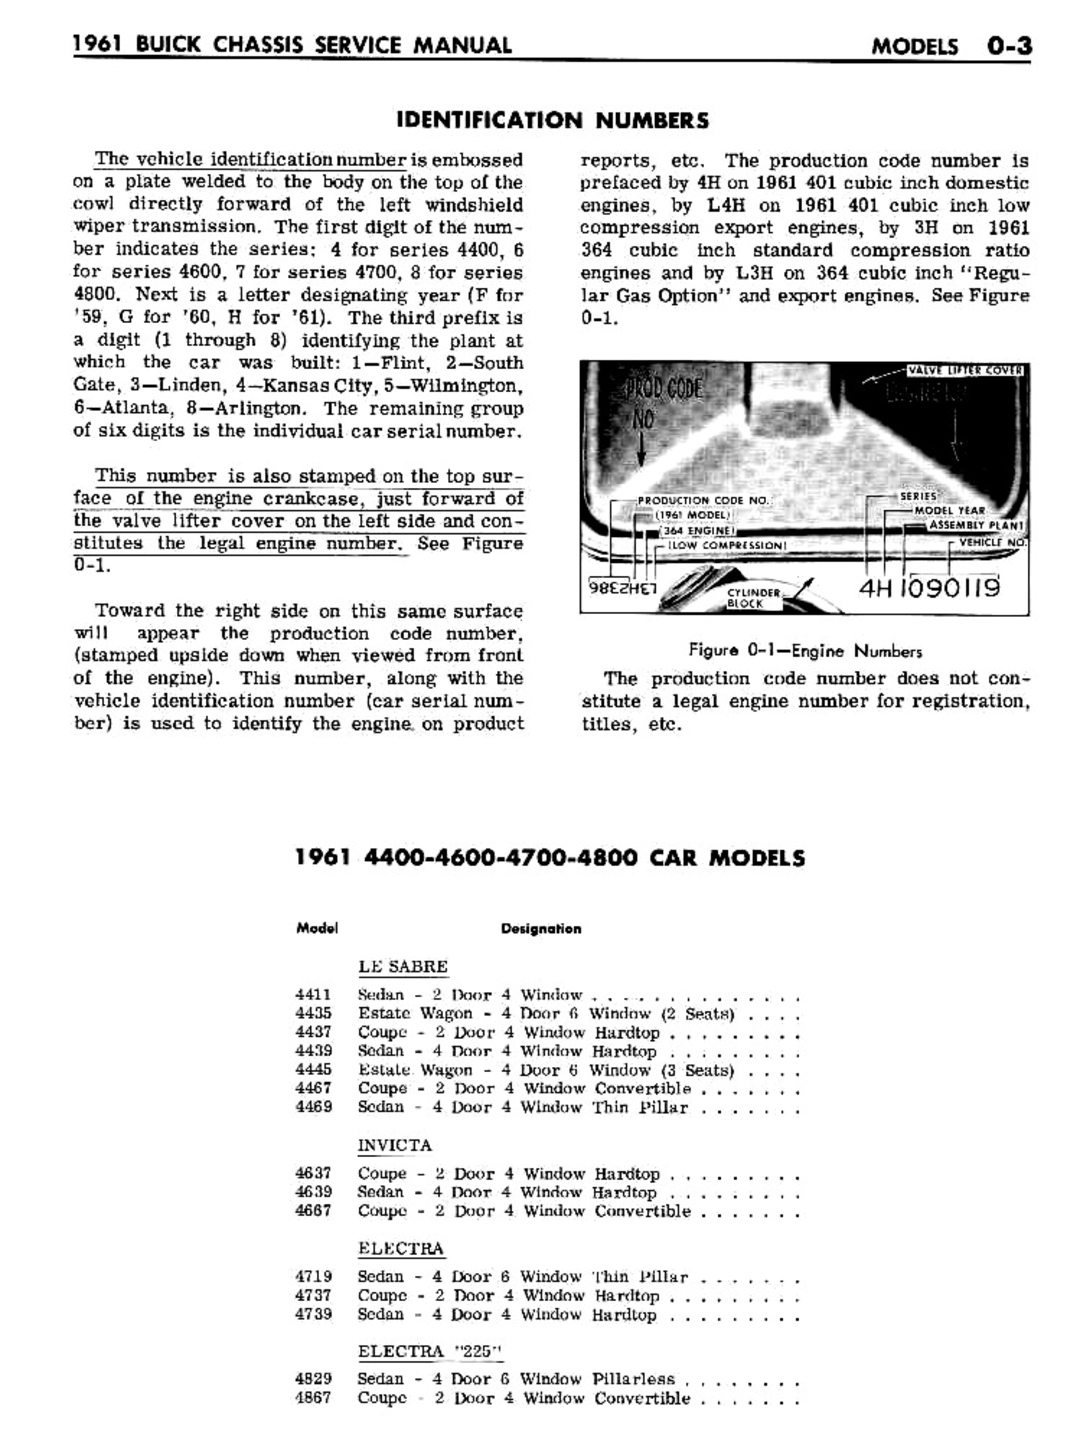 n_01 1961 Buick Shop Manual - Gen Information-005-005.jpg